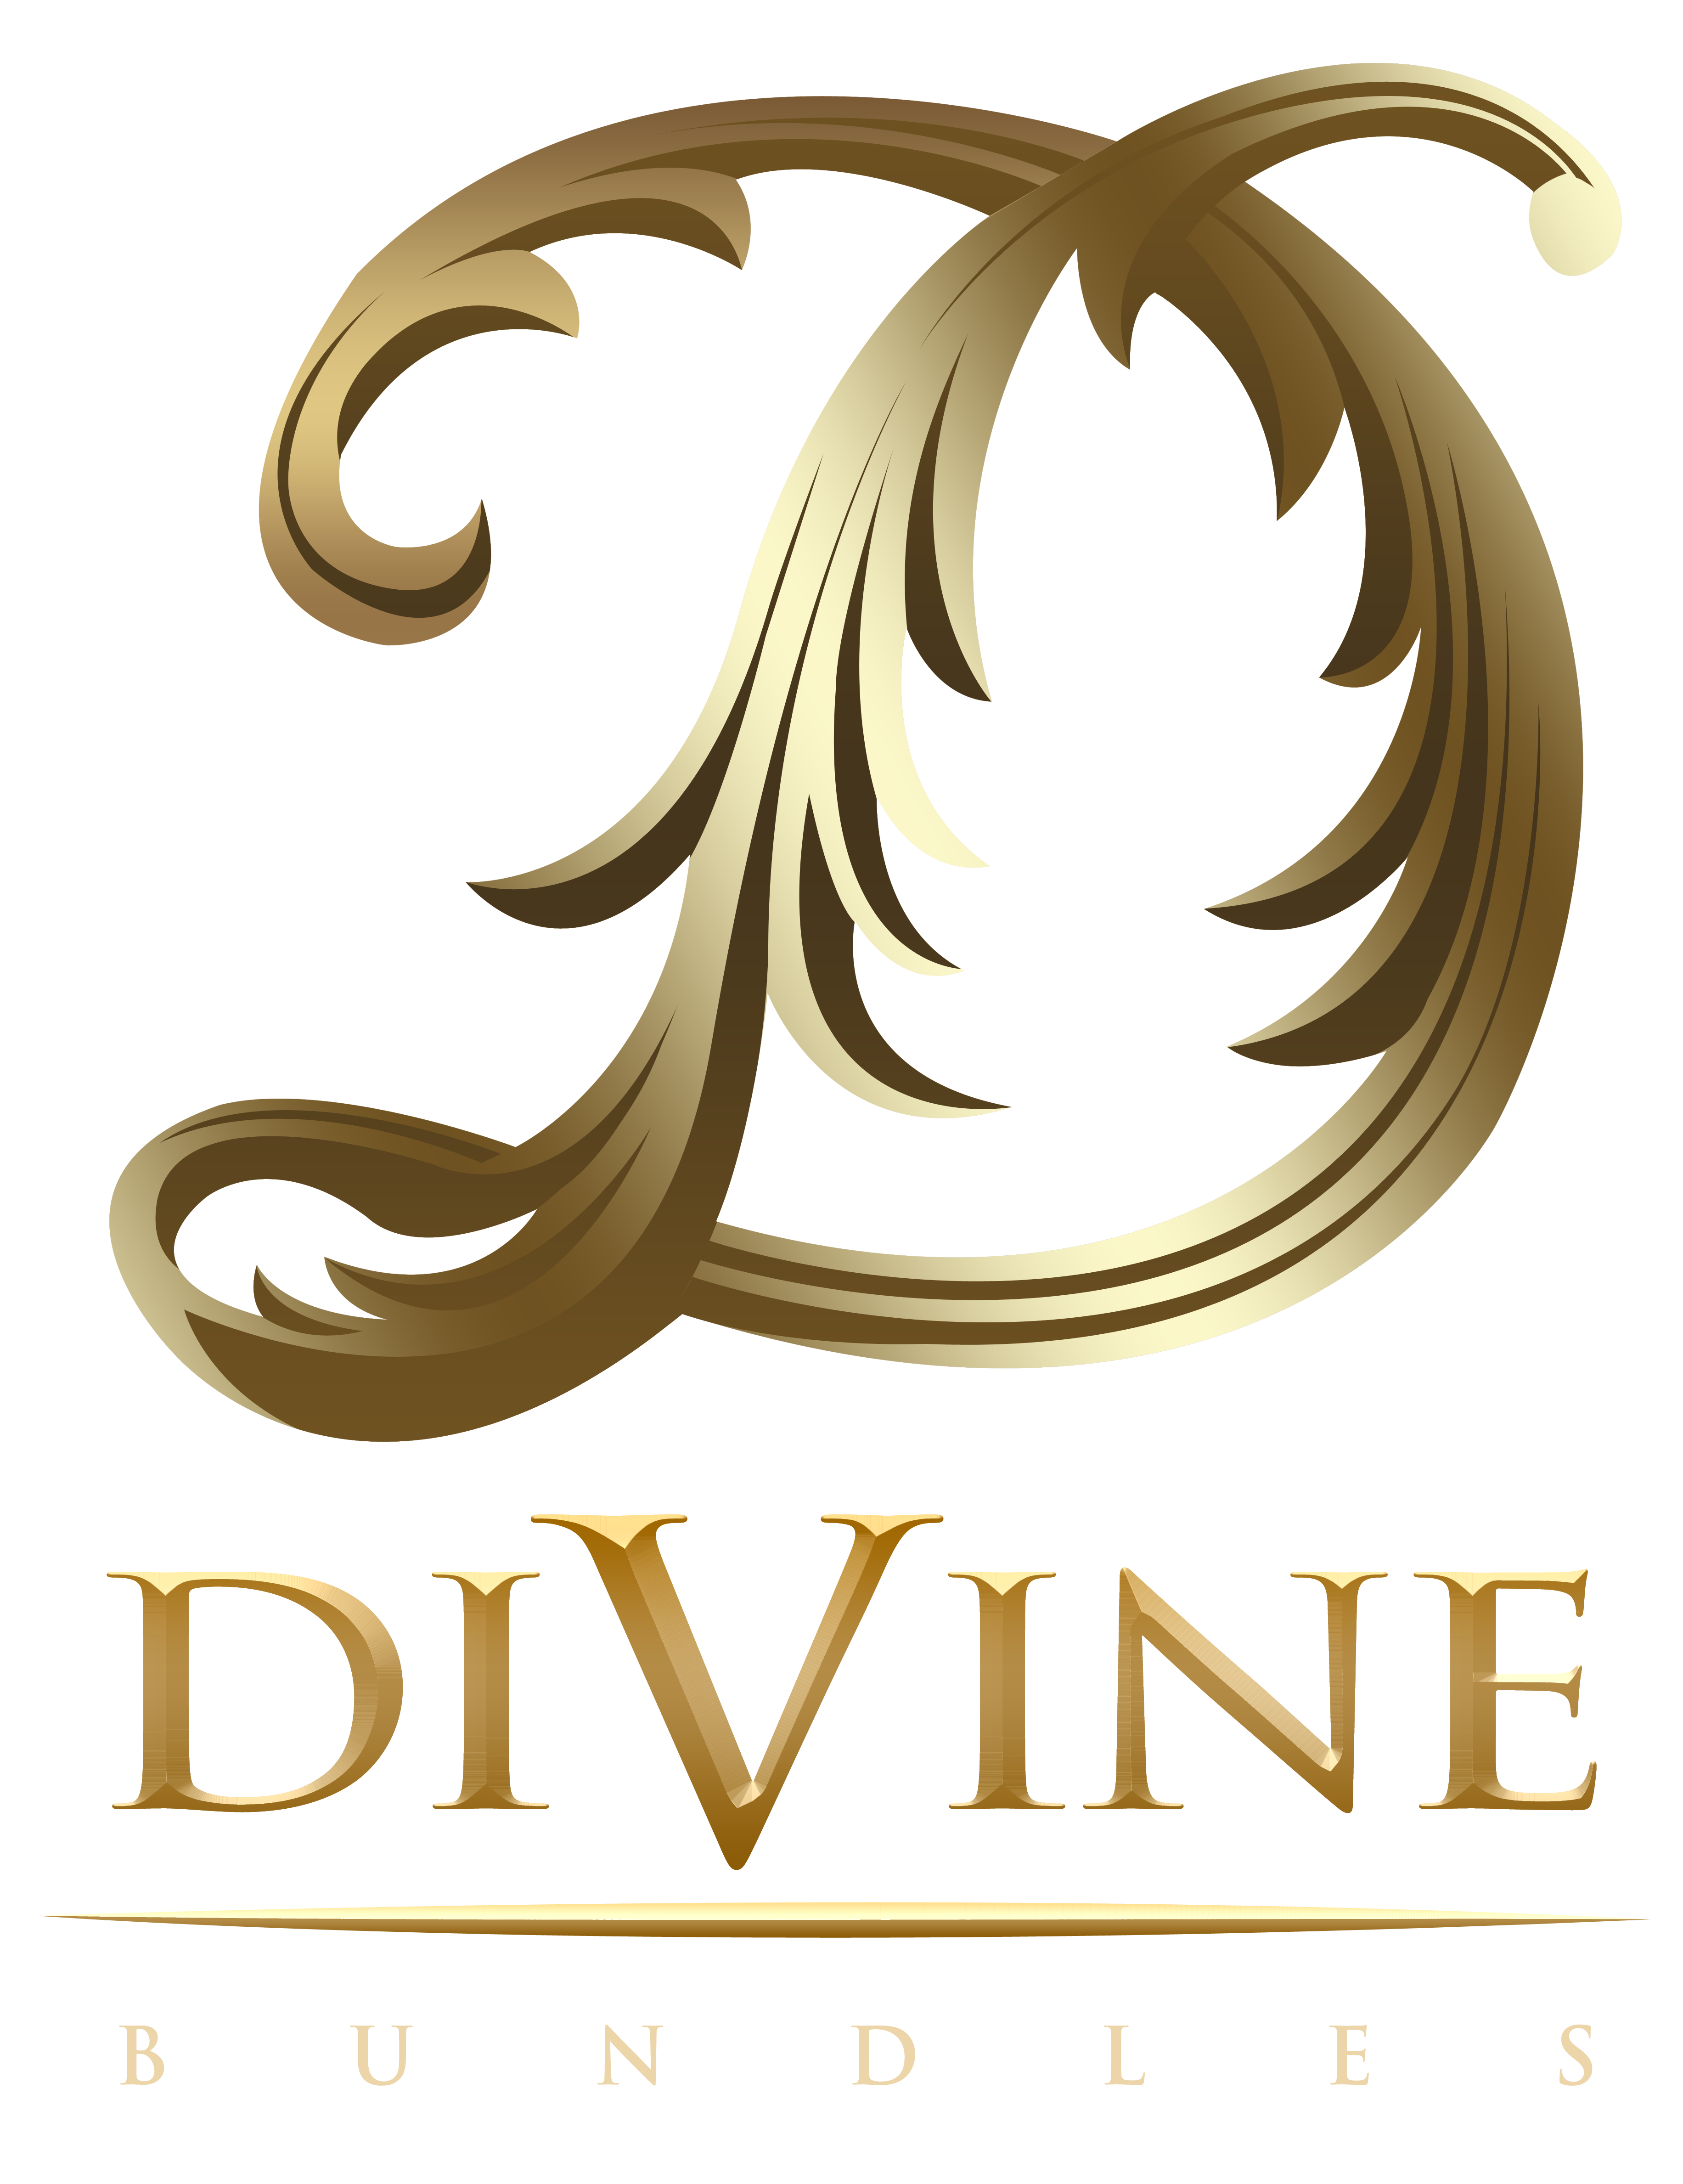 Divine Bundles: The Best Source for Virgin Hair.